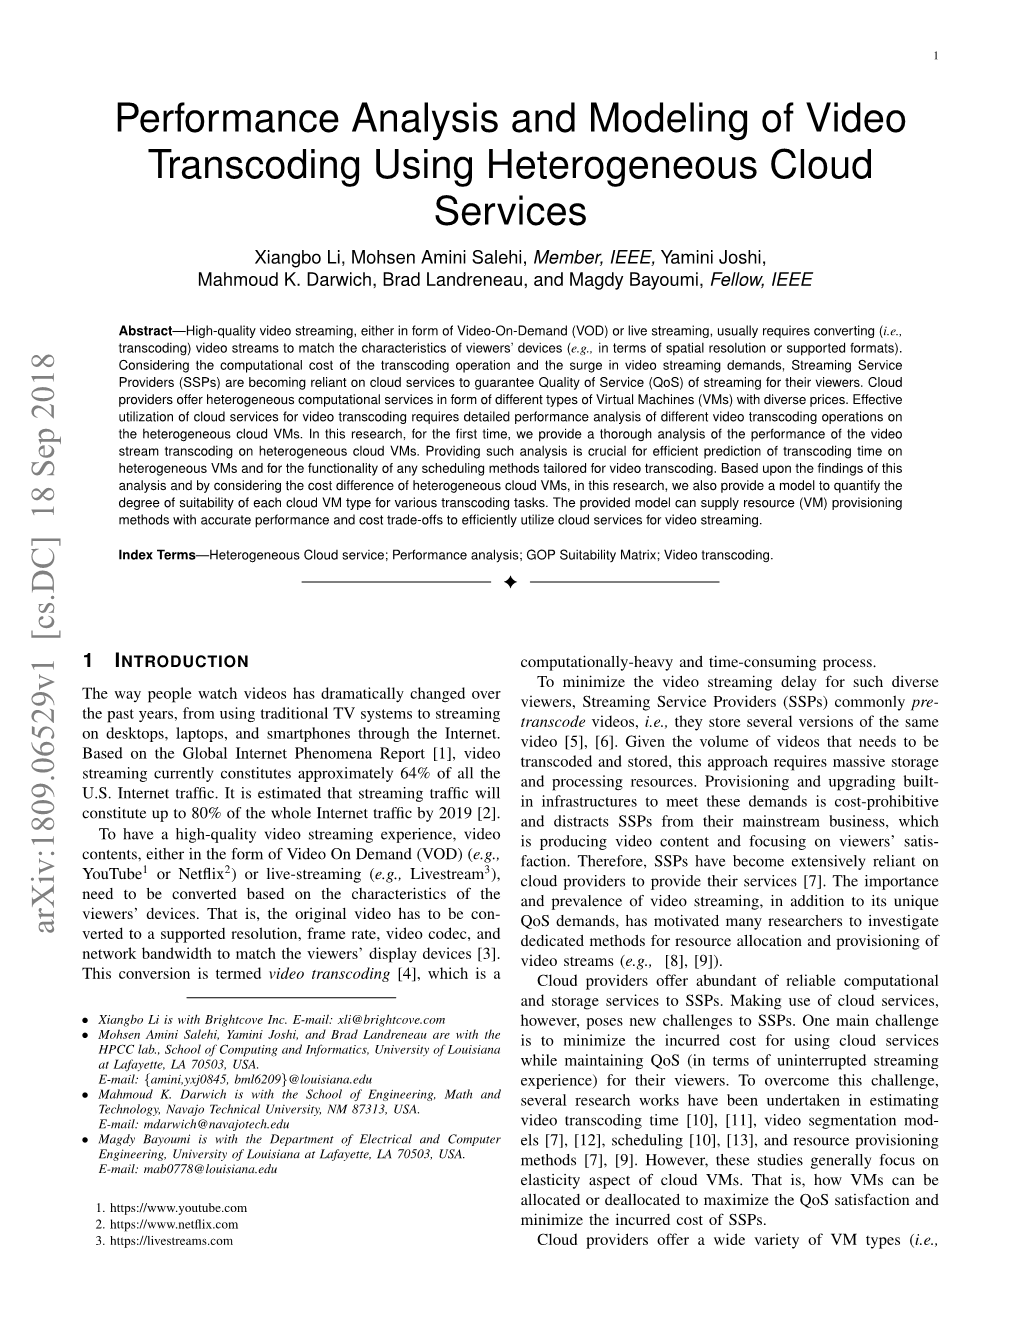 Performance Analysis and Modeling of Video Transcoding Using Heterogeneous Cloud Services Xiangbo Li, Mohsen Amini Salehi, Member, IEEE, Yamini Joshi, Mahmoud K